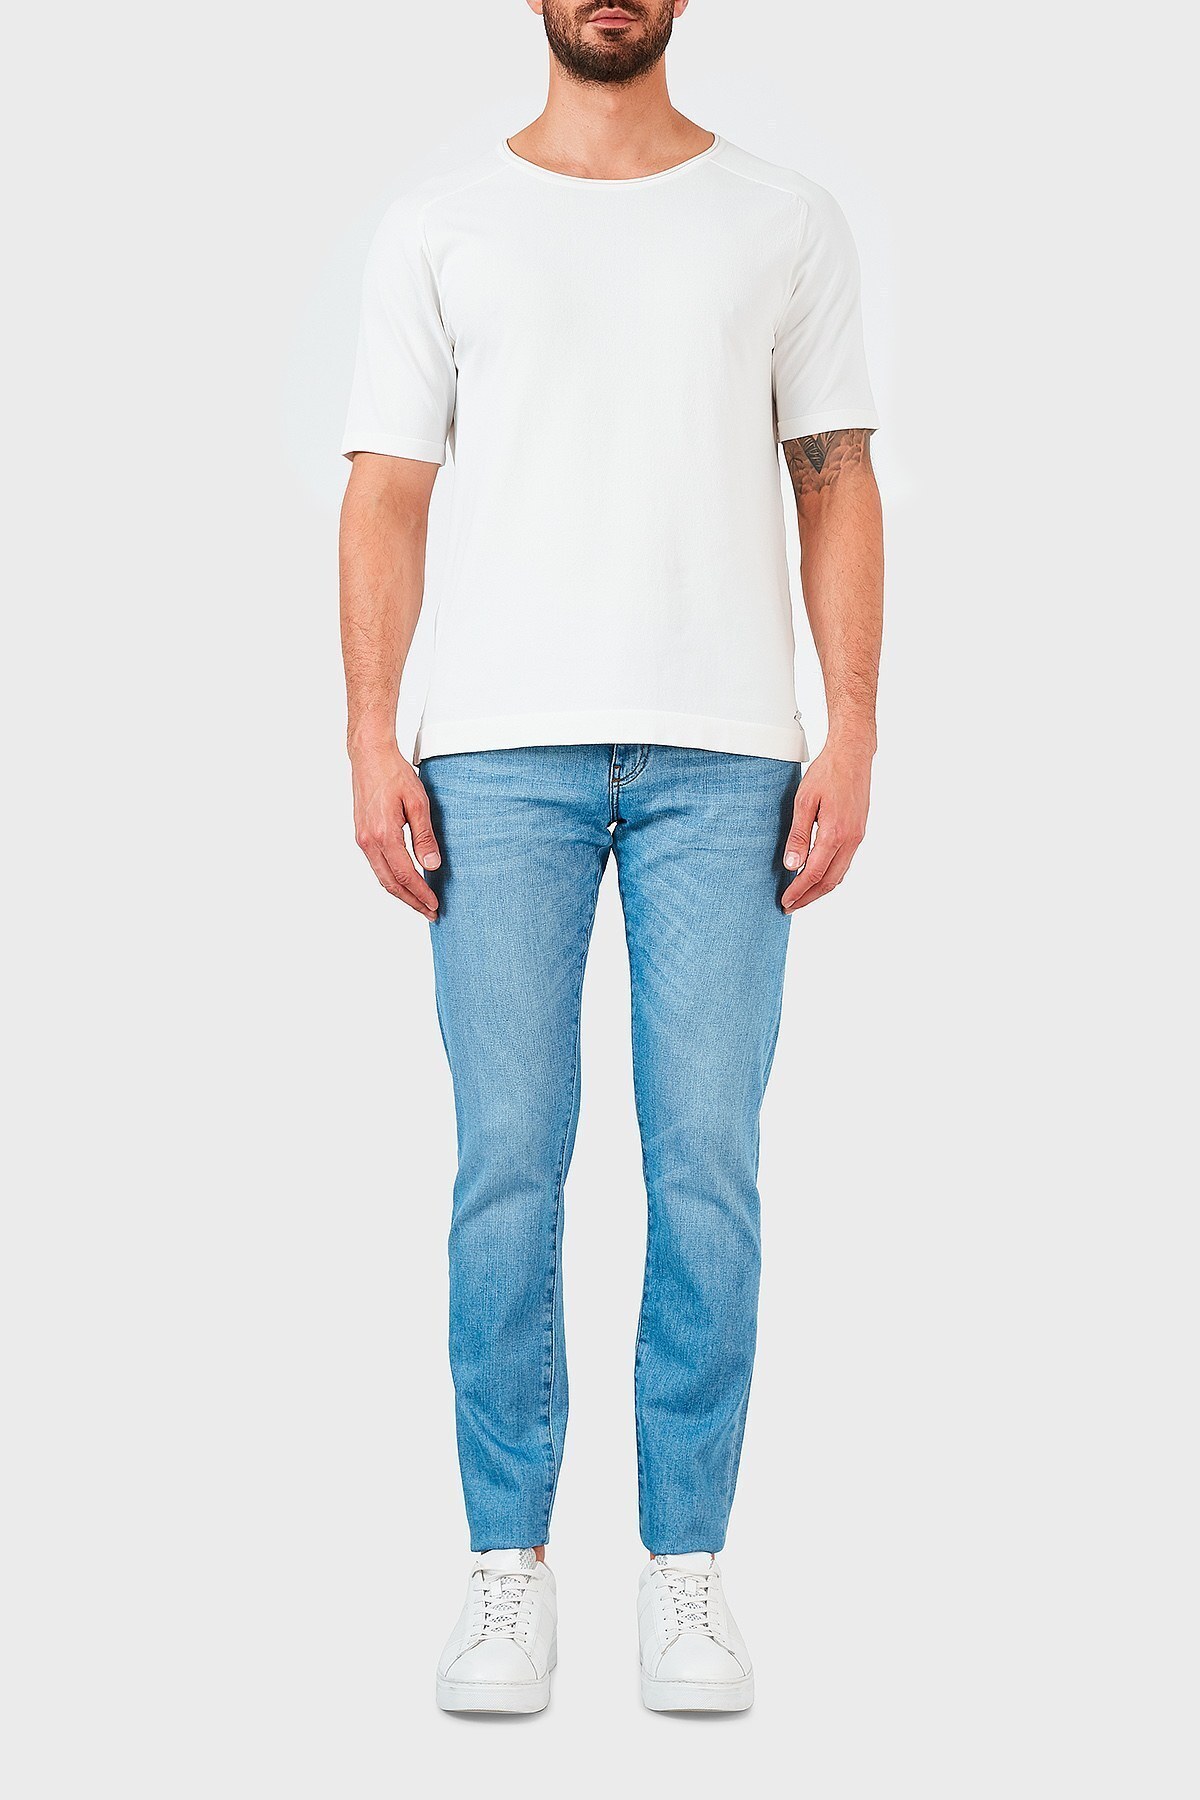 Armani Exchange Pamuklu Skinny J14 Jeans Erkek Kot Pantolon 3KZJ14 Z1L5Z 1500 MAVİ